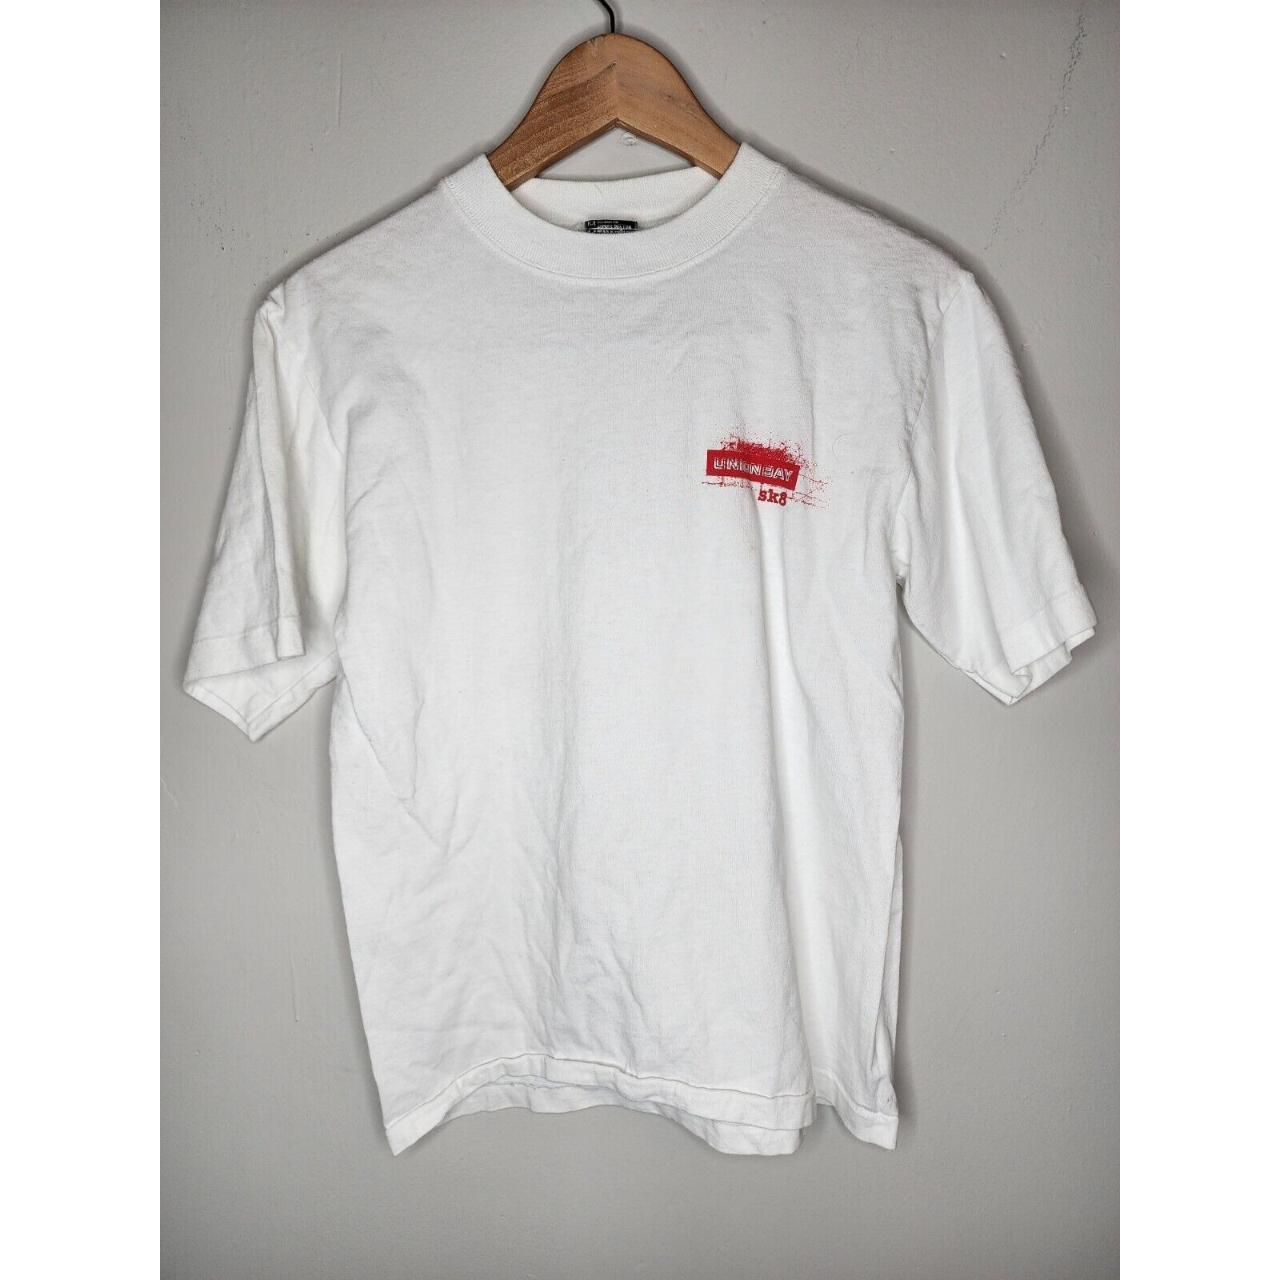 Union Bay Men's White T-shirt (4)